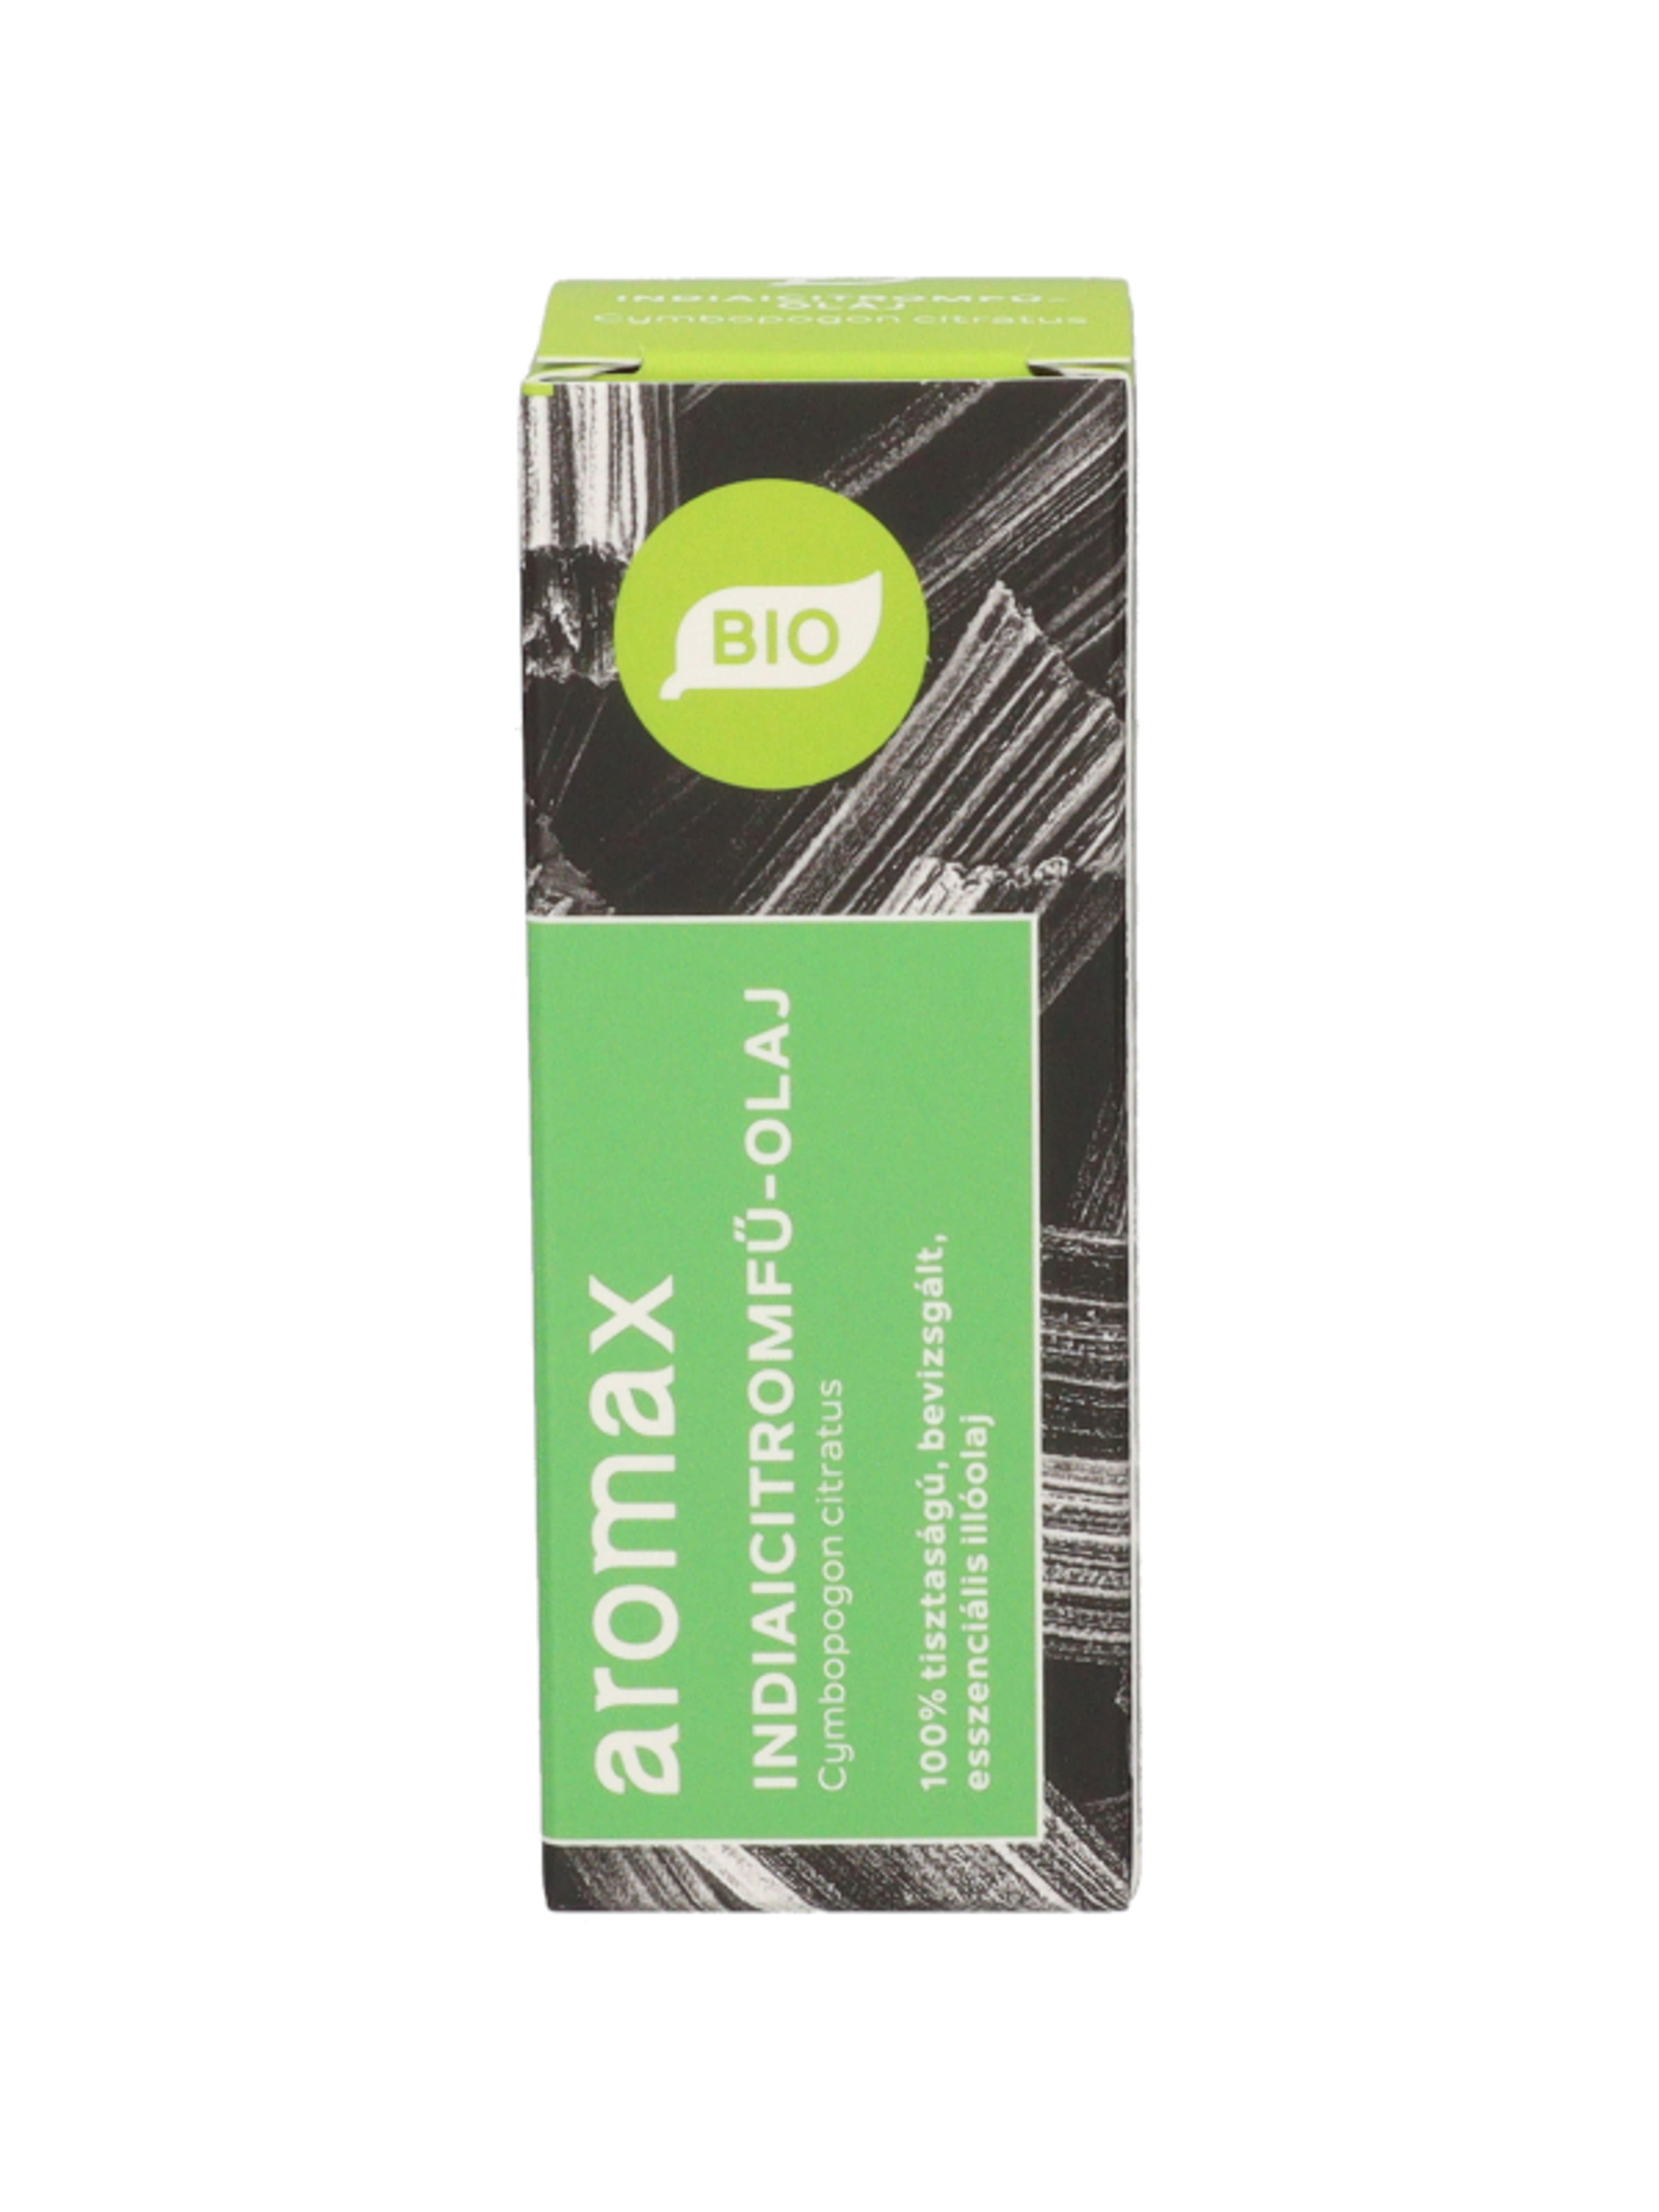 Aromax Bio Indiai citromfűolaj - 10 ml-2